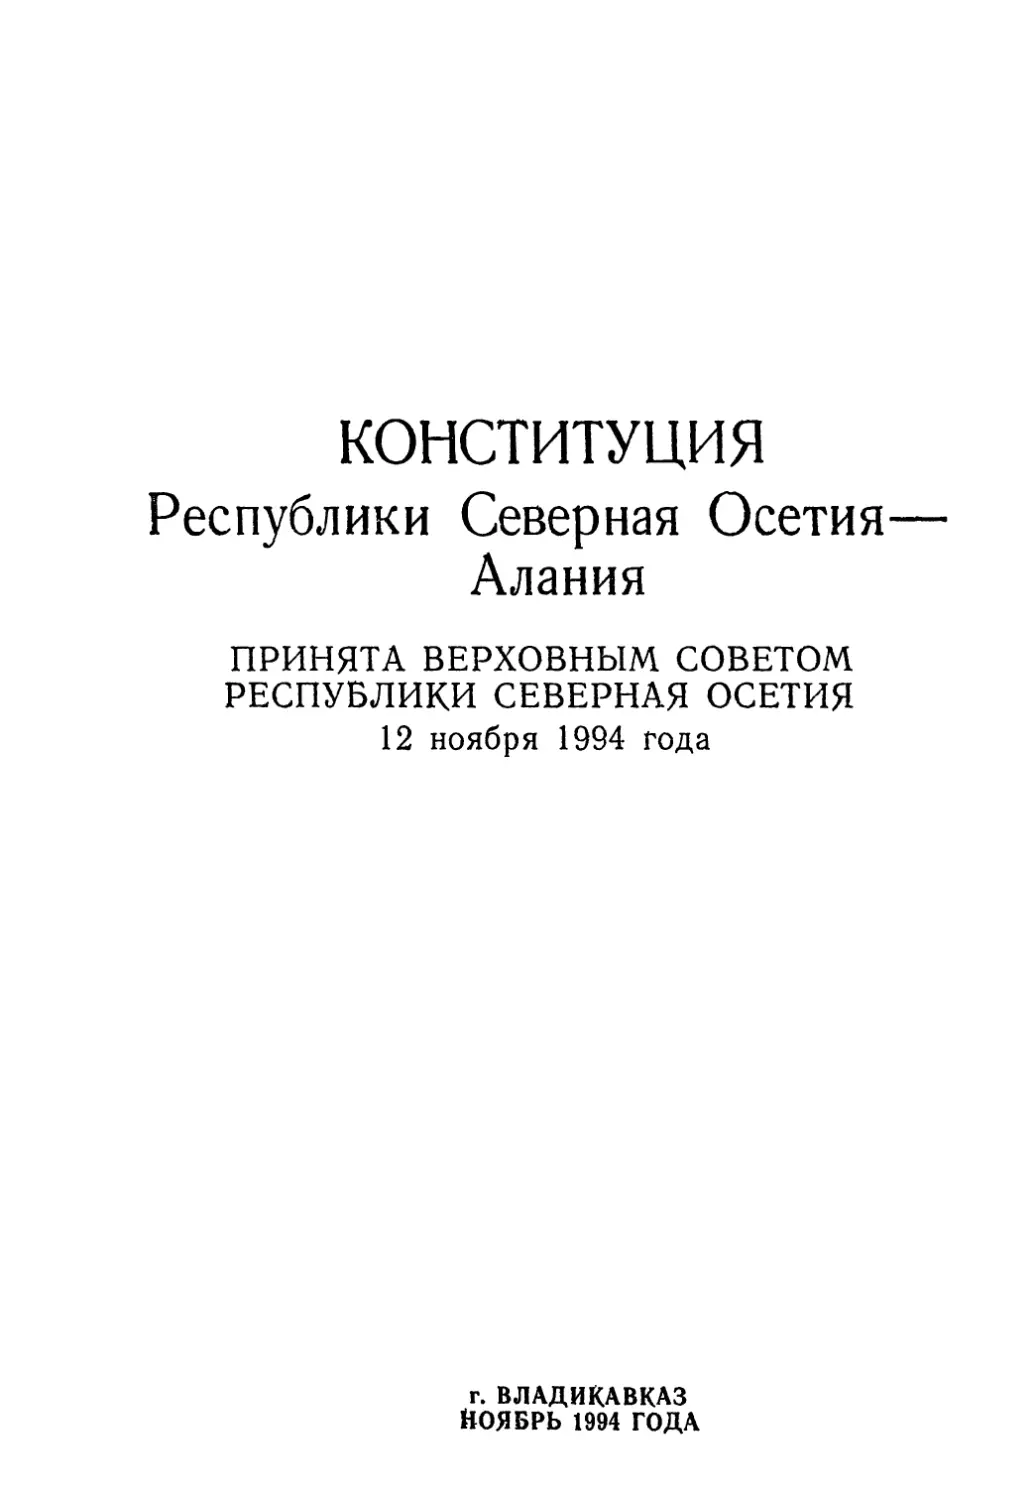 Русский текст